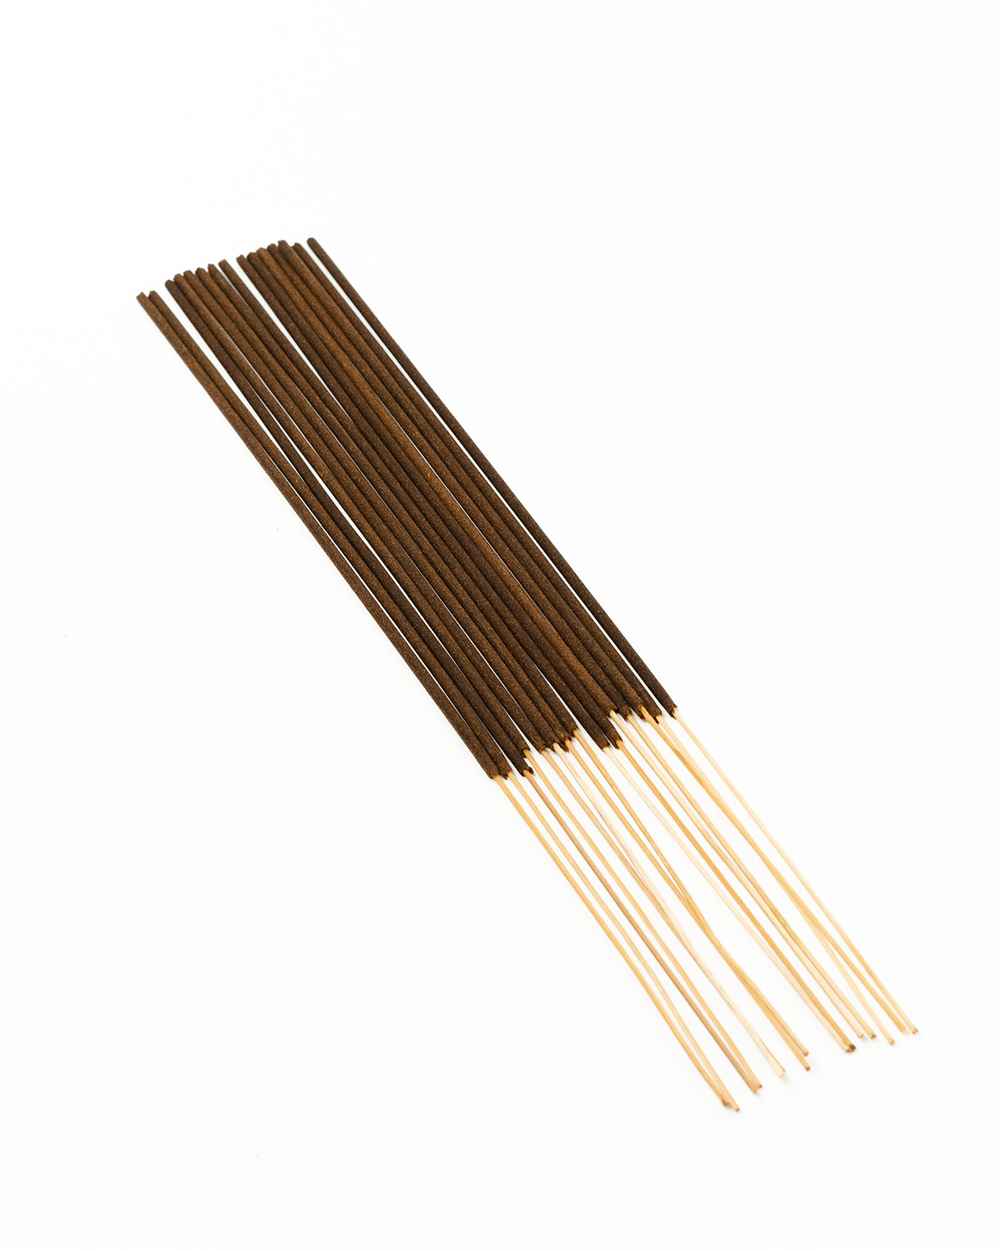 CHANNEL Incense Sticks - 15 Sticks